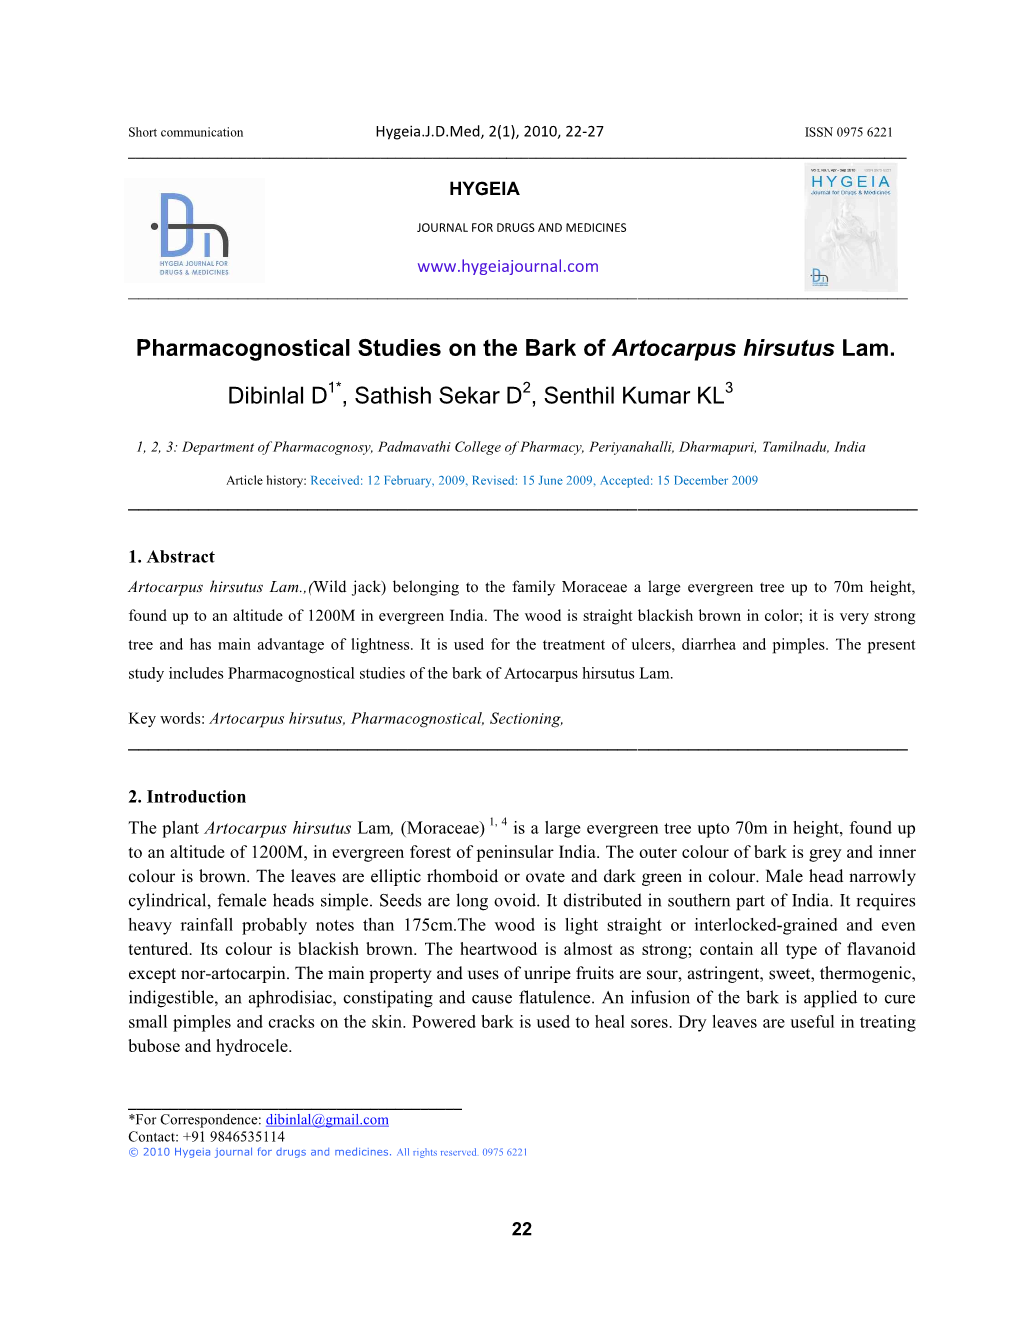 Pharmacognostical Studies on the Bark of Artocarpus Hirsutus Lam